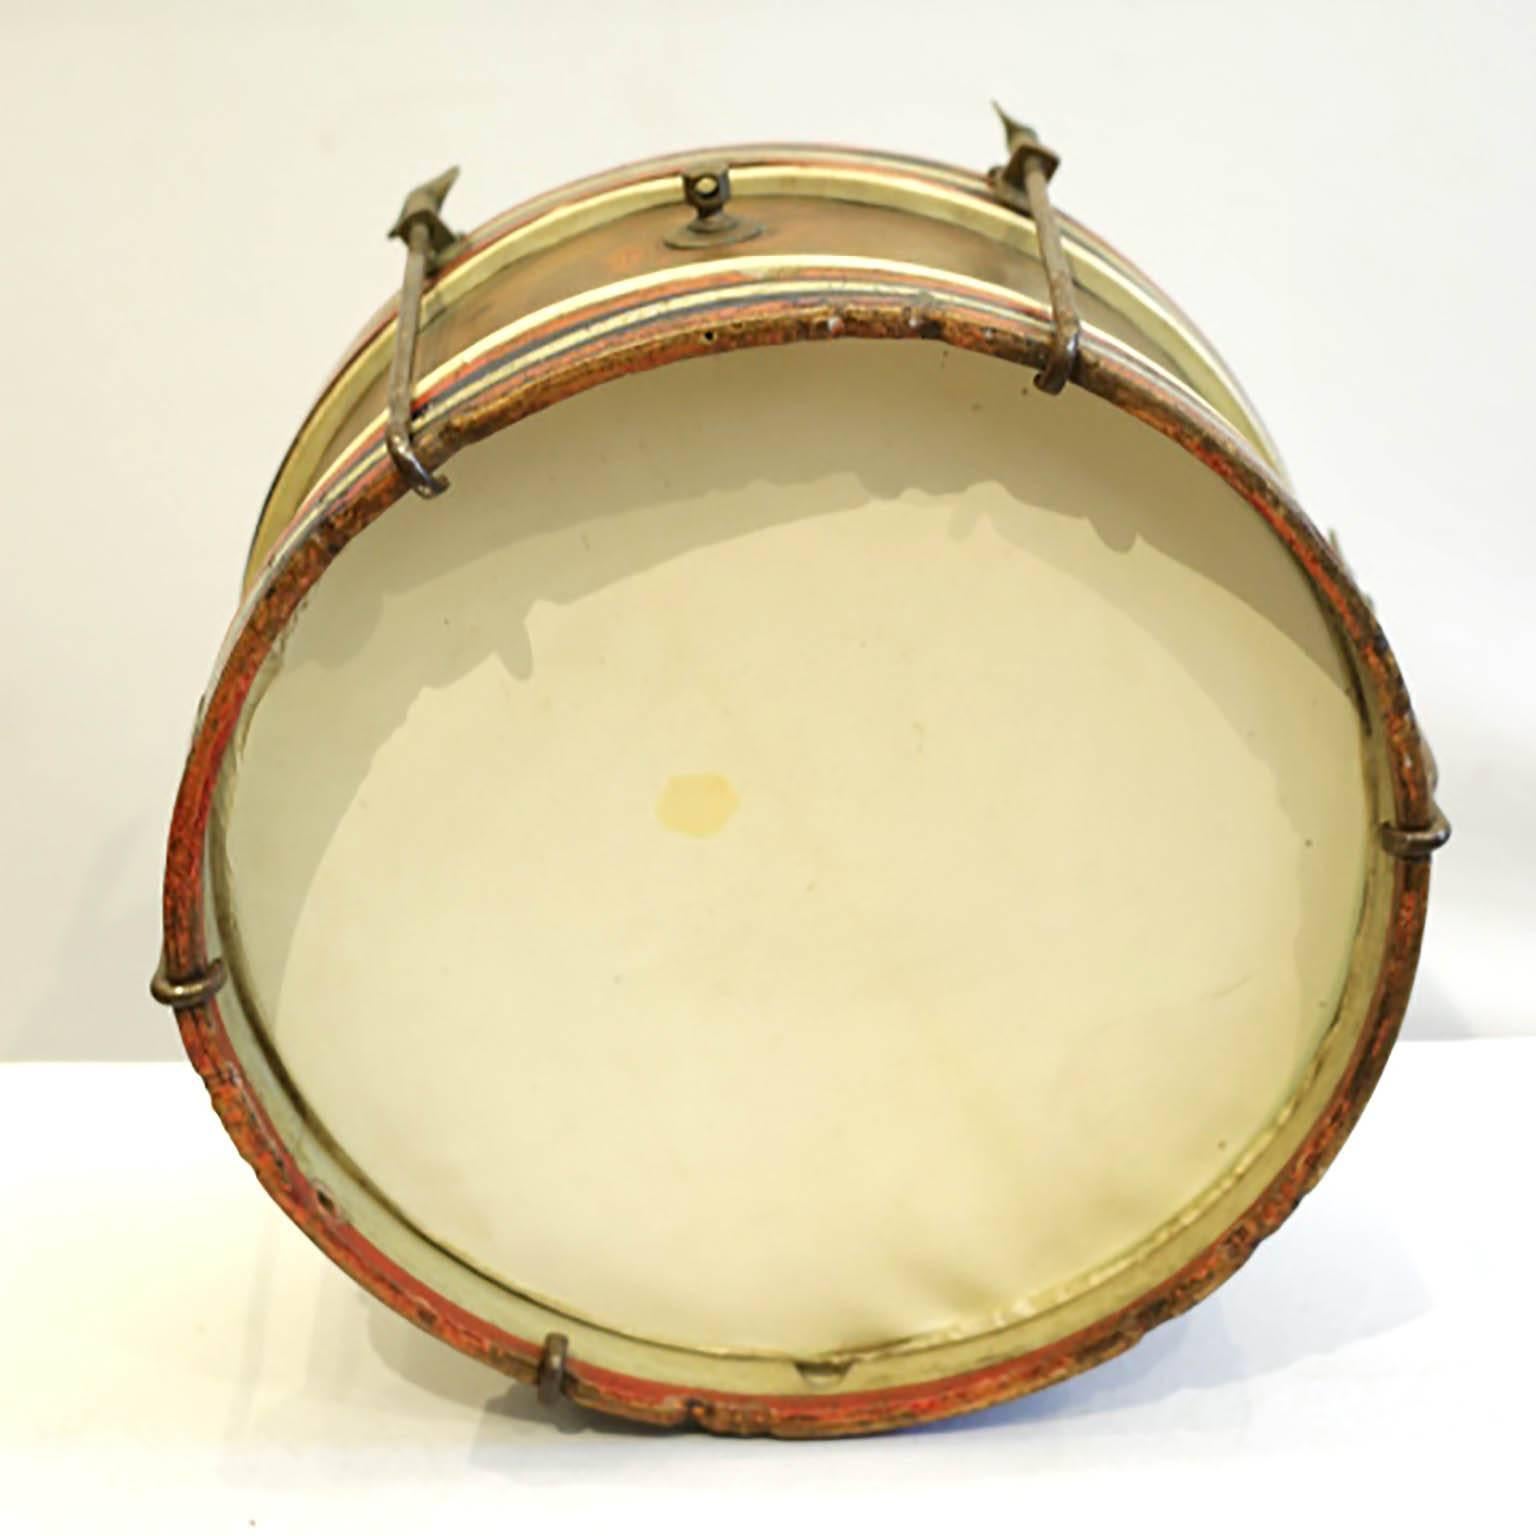 Brass Antique Calfskin Snare Drum, circa 1920-1940s